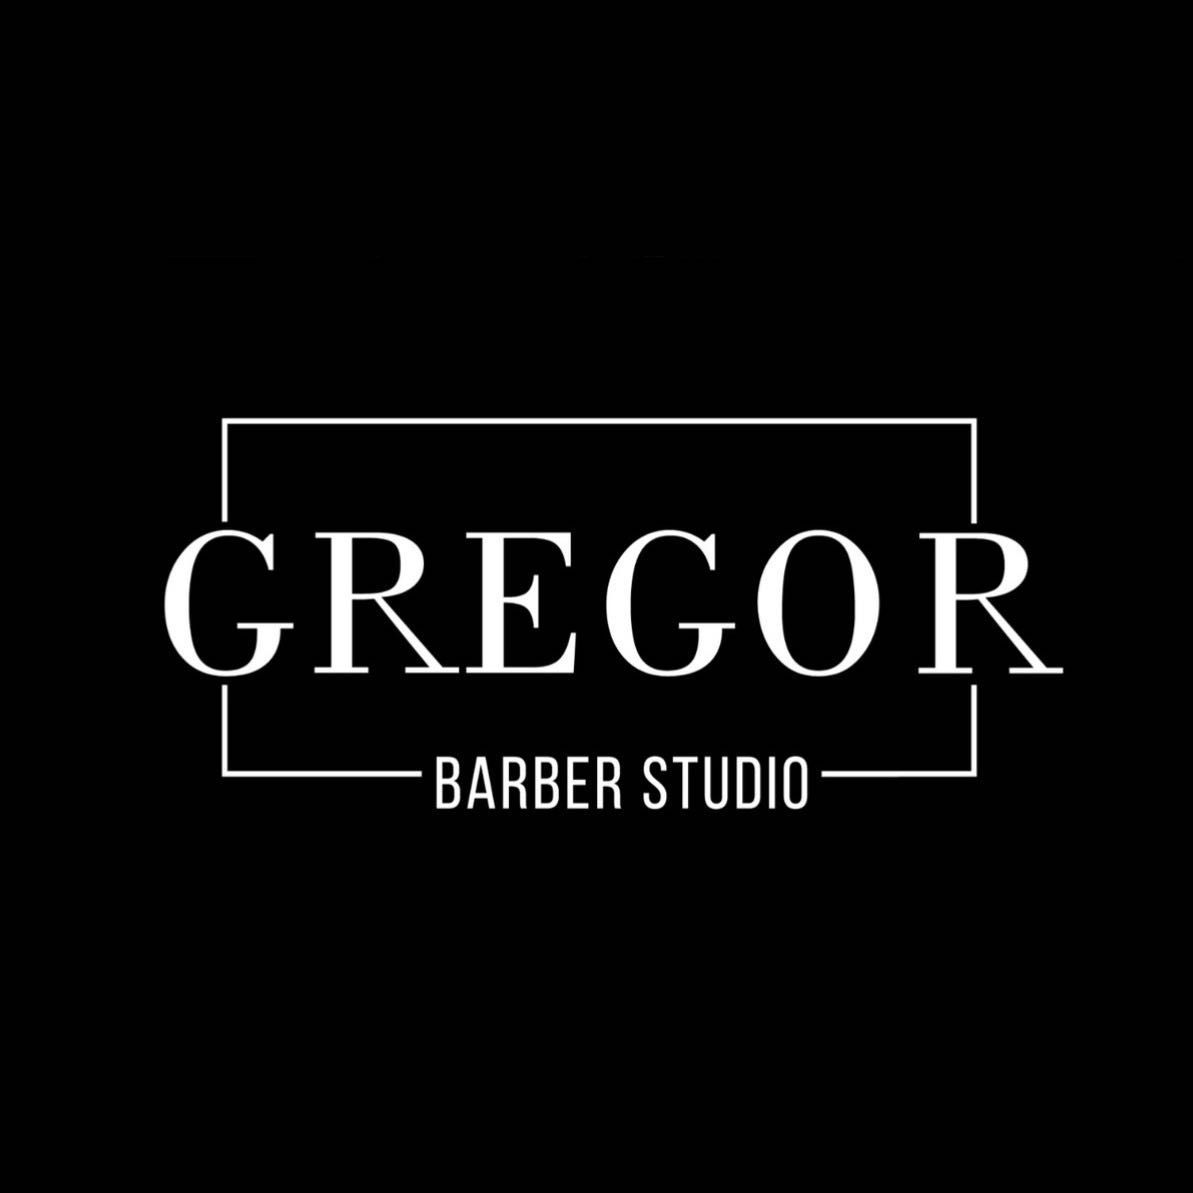 Gregor barber studio, Calle Emilio Laria, 7, Gregor barber, 33550, Cangas de Onís